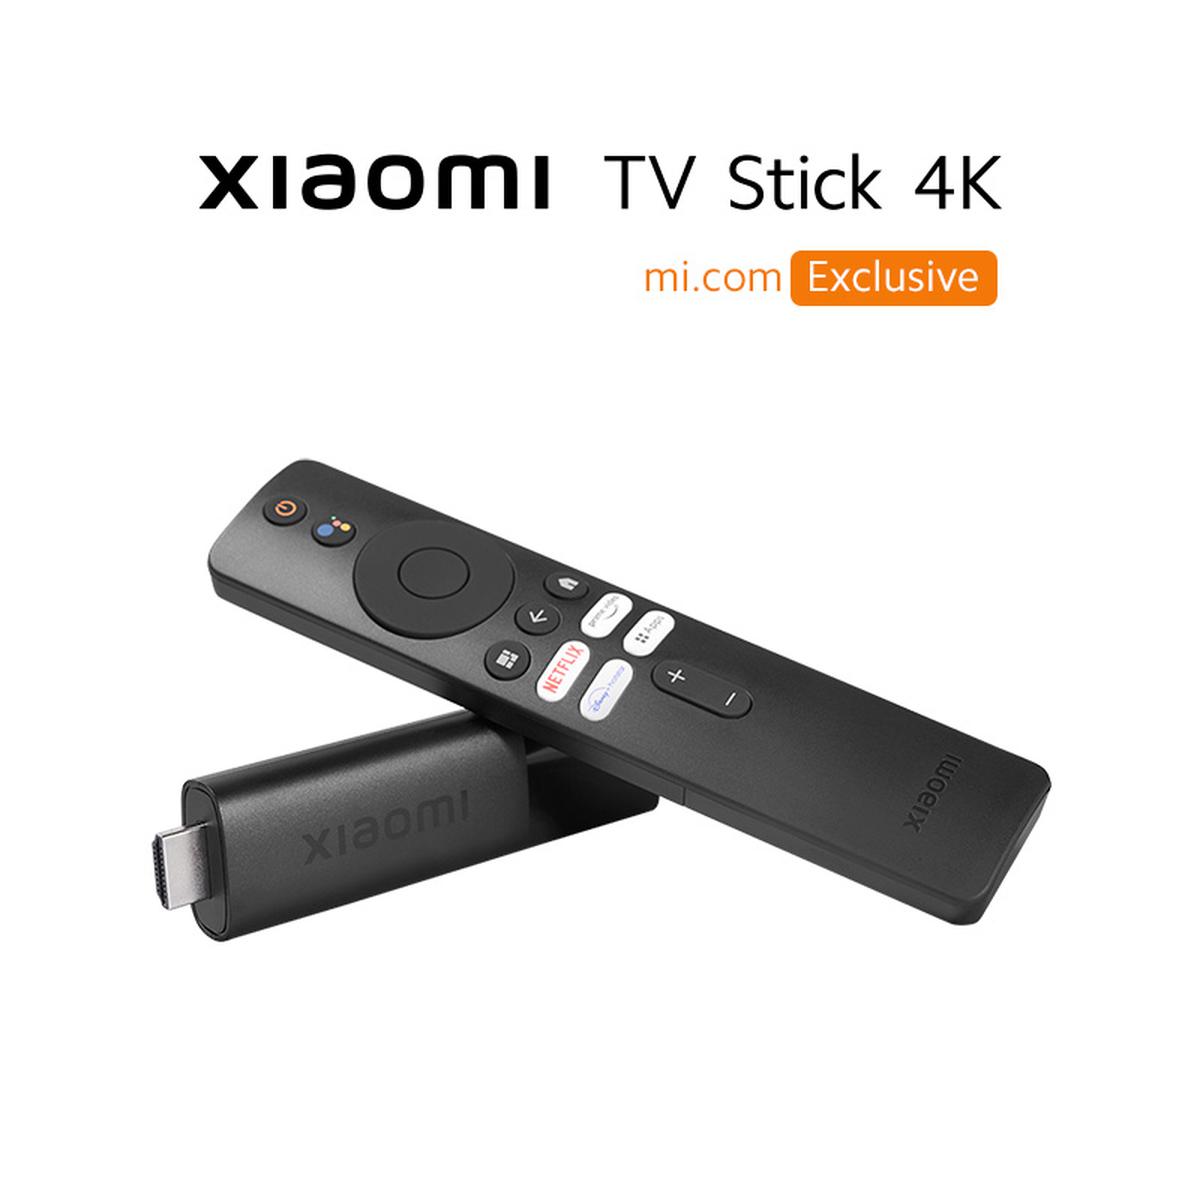 Xiaomi Mi TV Stick 4k Price in Bangladesh